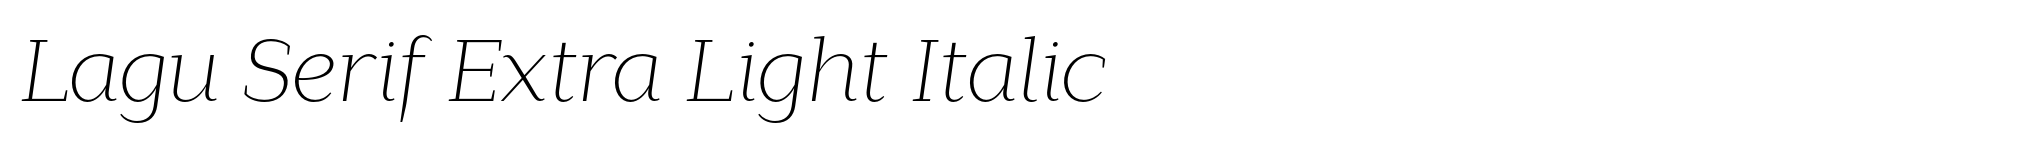 Lagu Serif Extra Light Italic image